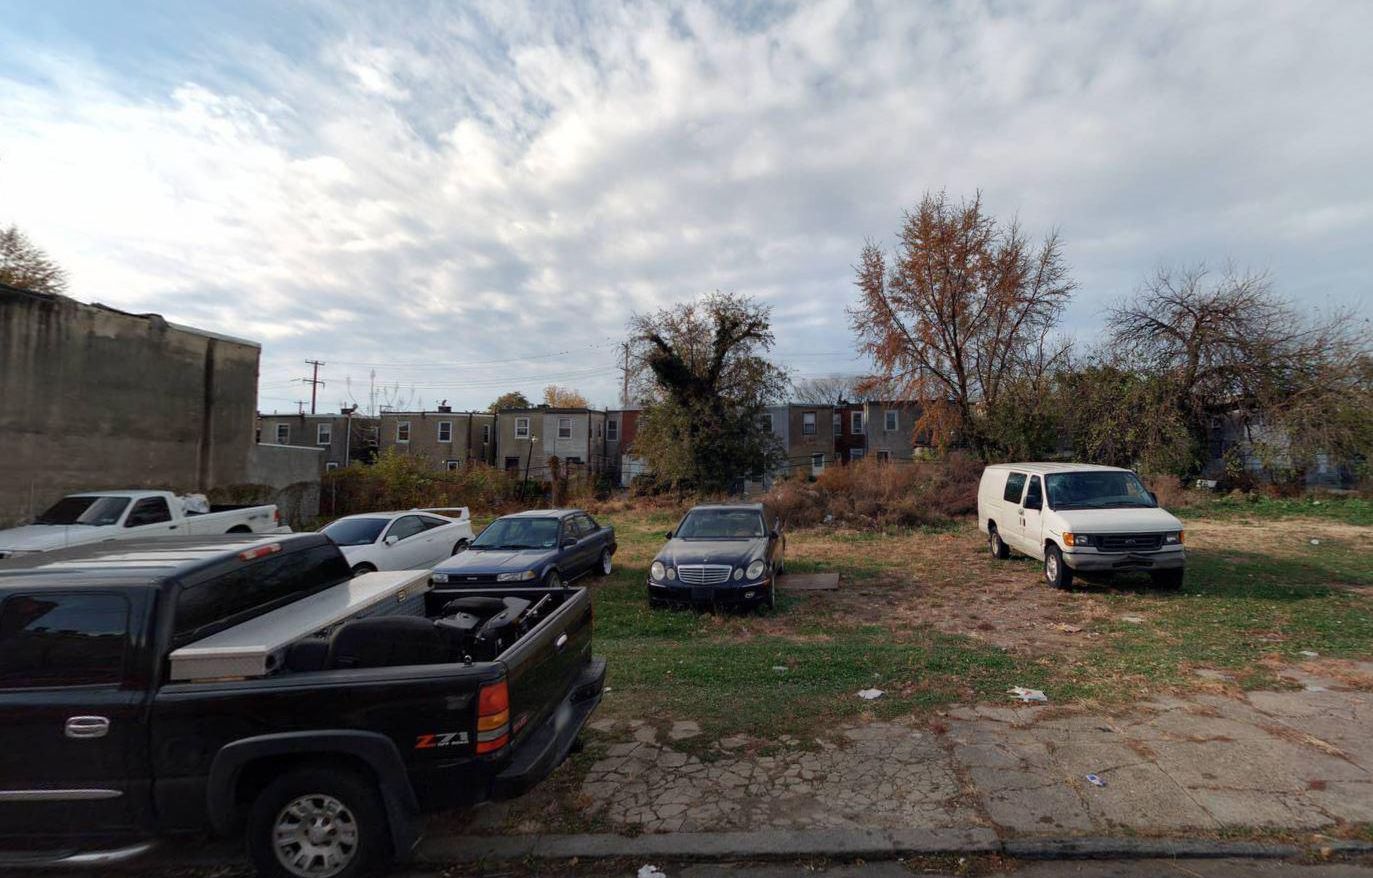 2516 North 6th Street. Site conditions prior to redevelopment. Credit: Plato Studio via the City of Philadelphia